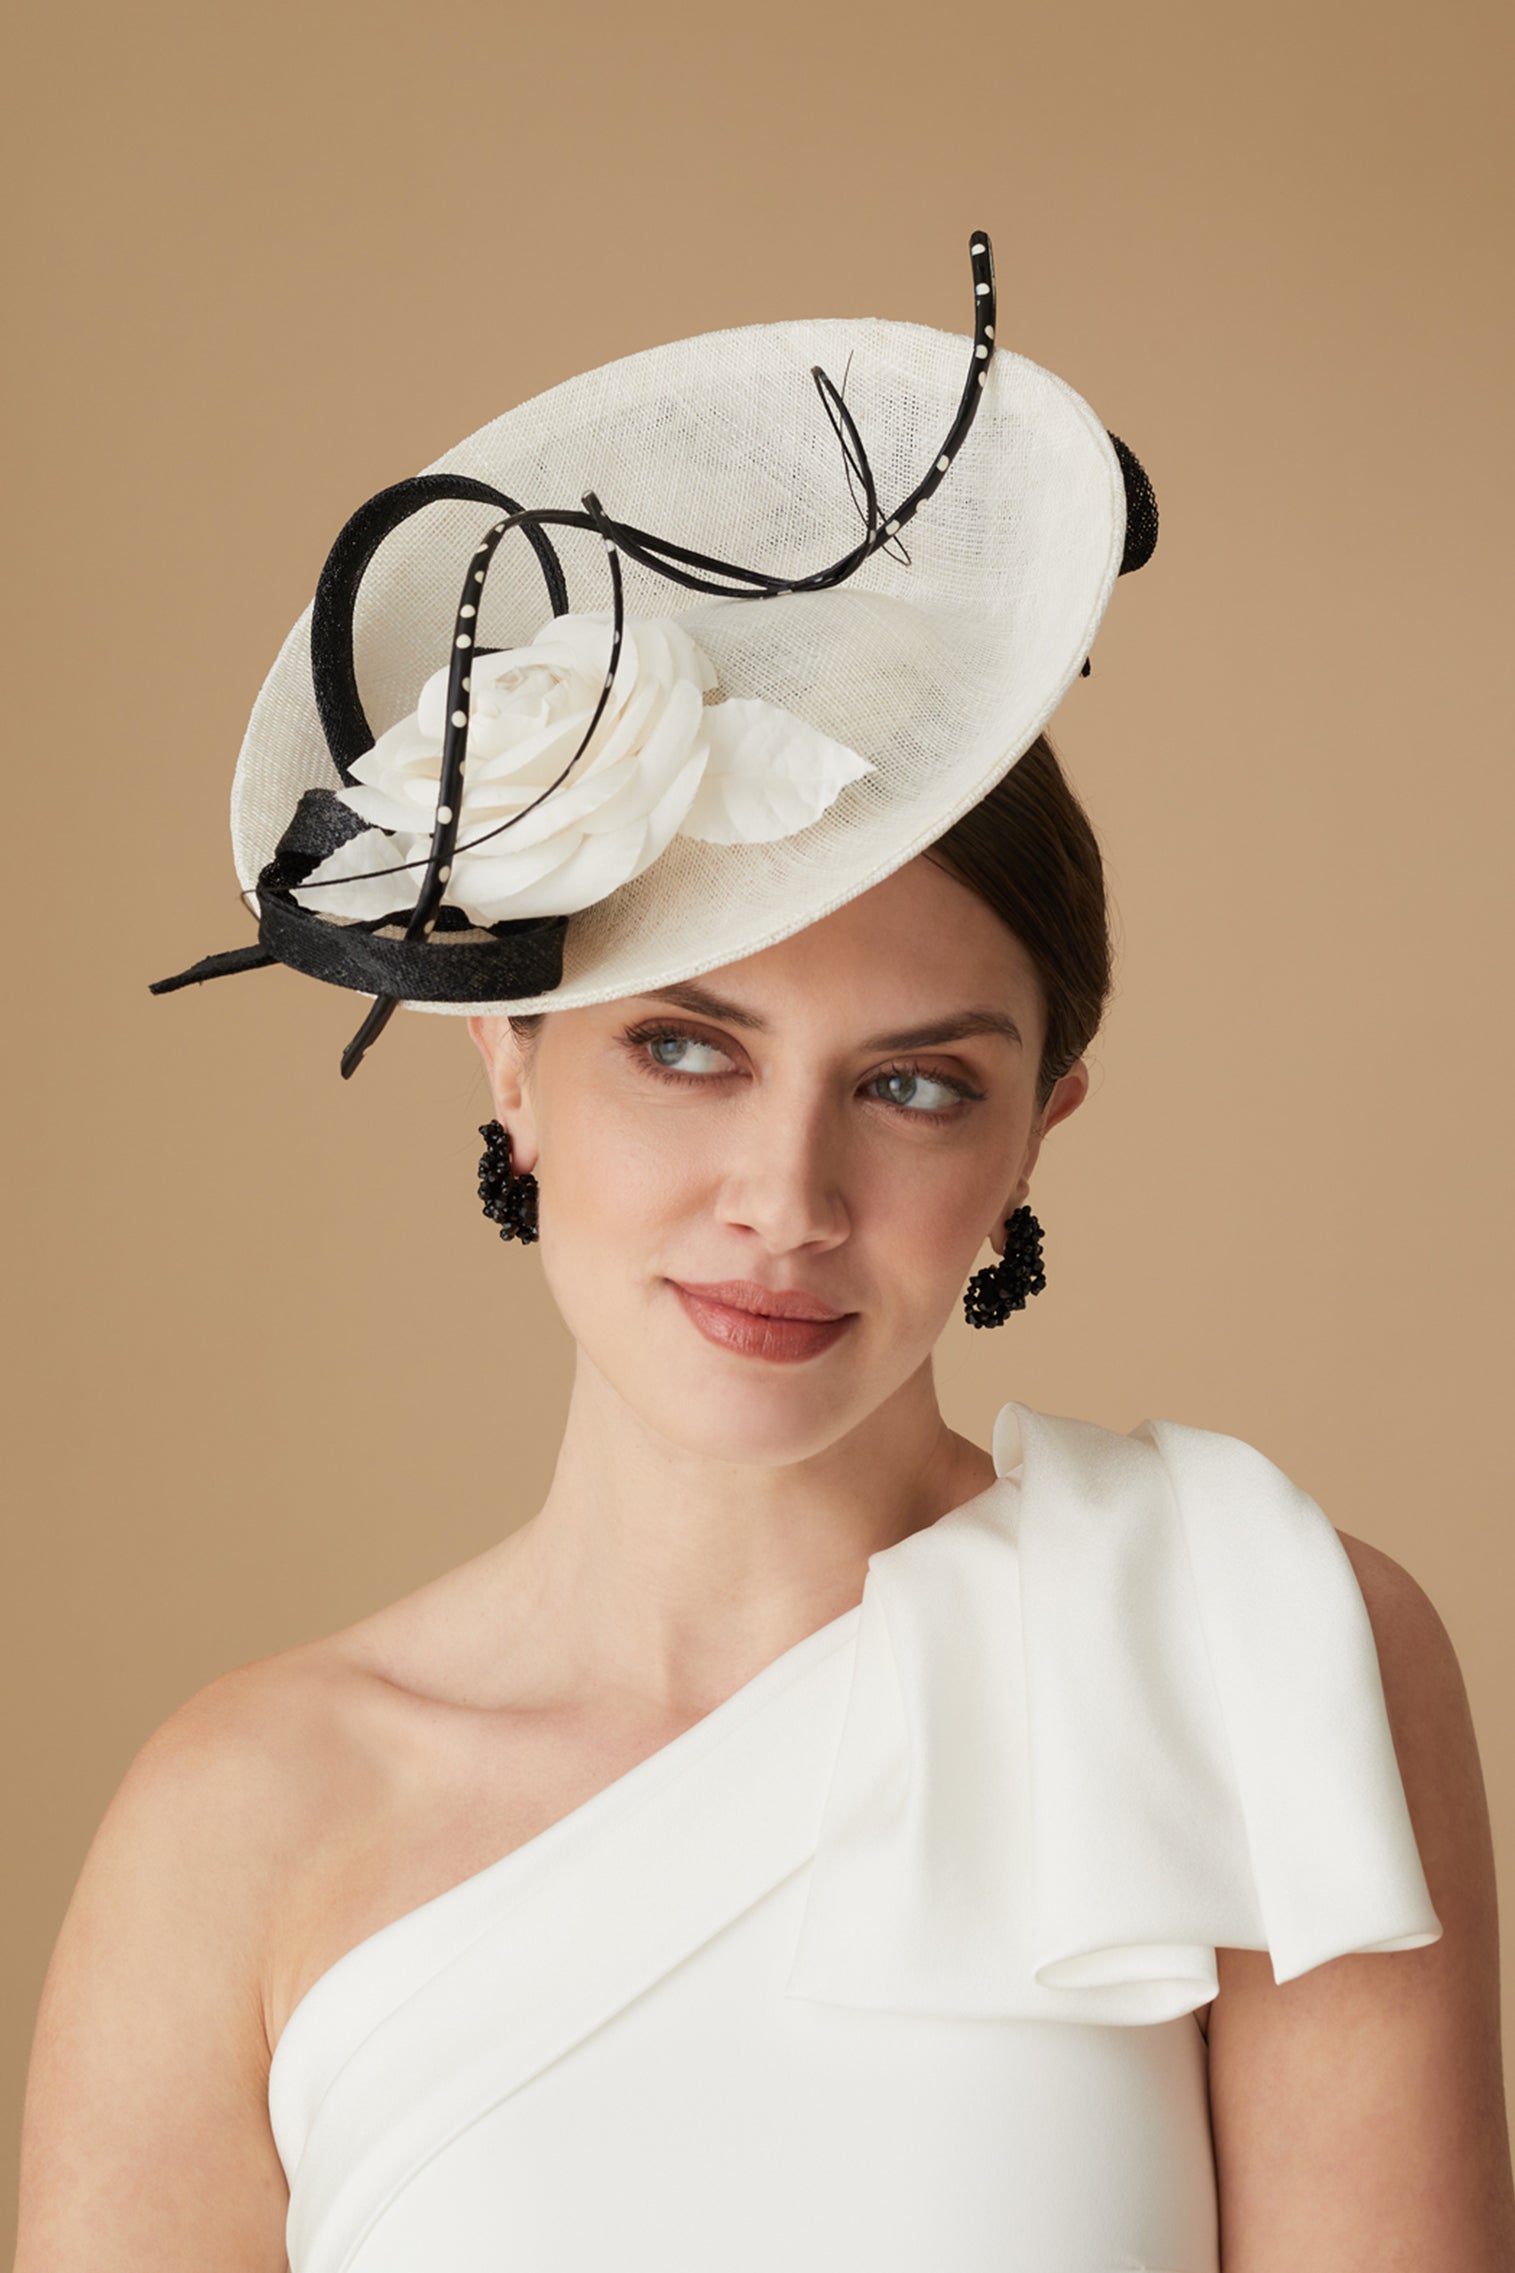 Assam White and Black Saucer Hat - Women’s Hats - Lock & Co. Hatters London UK